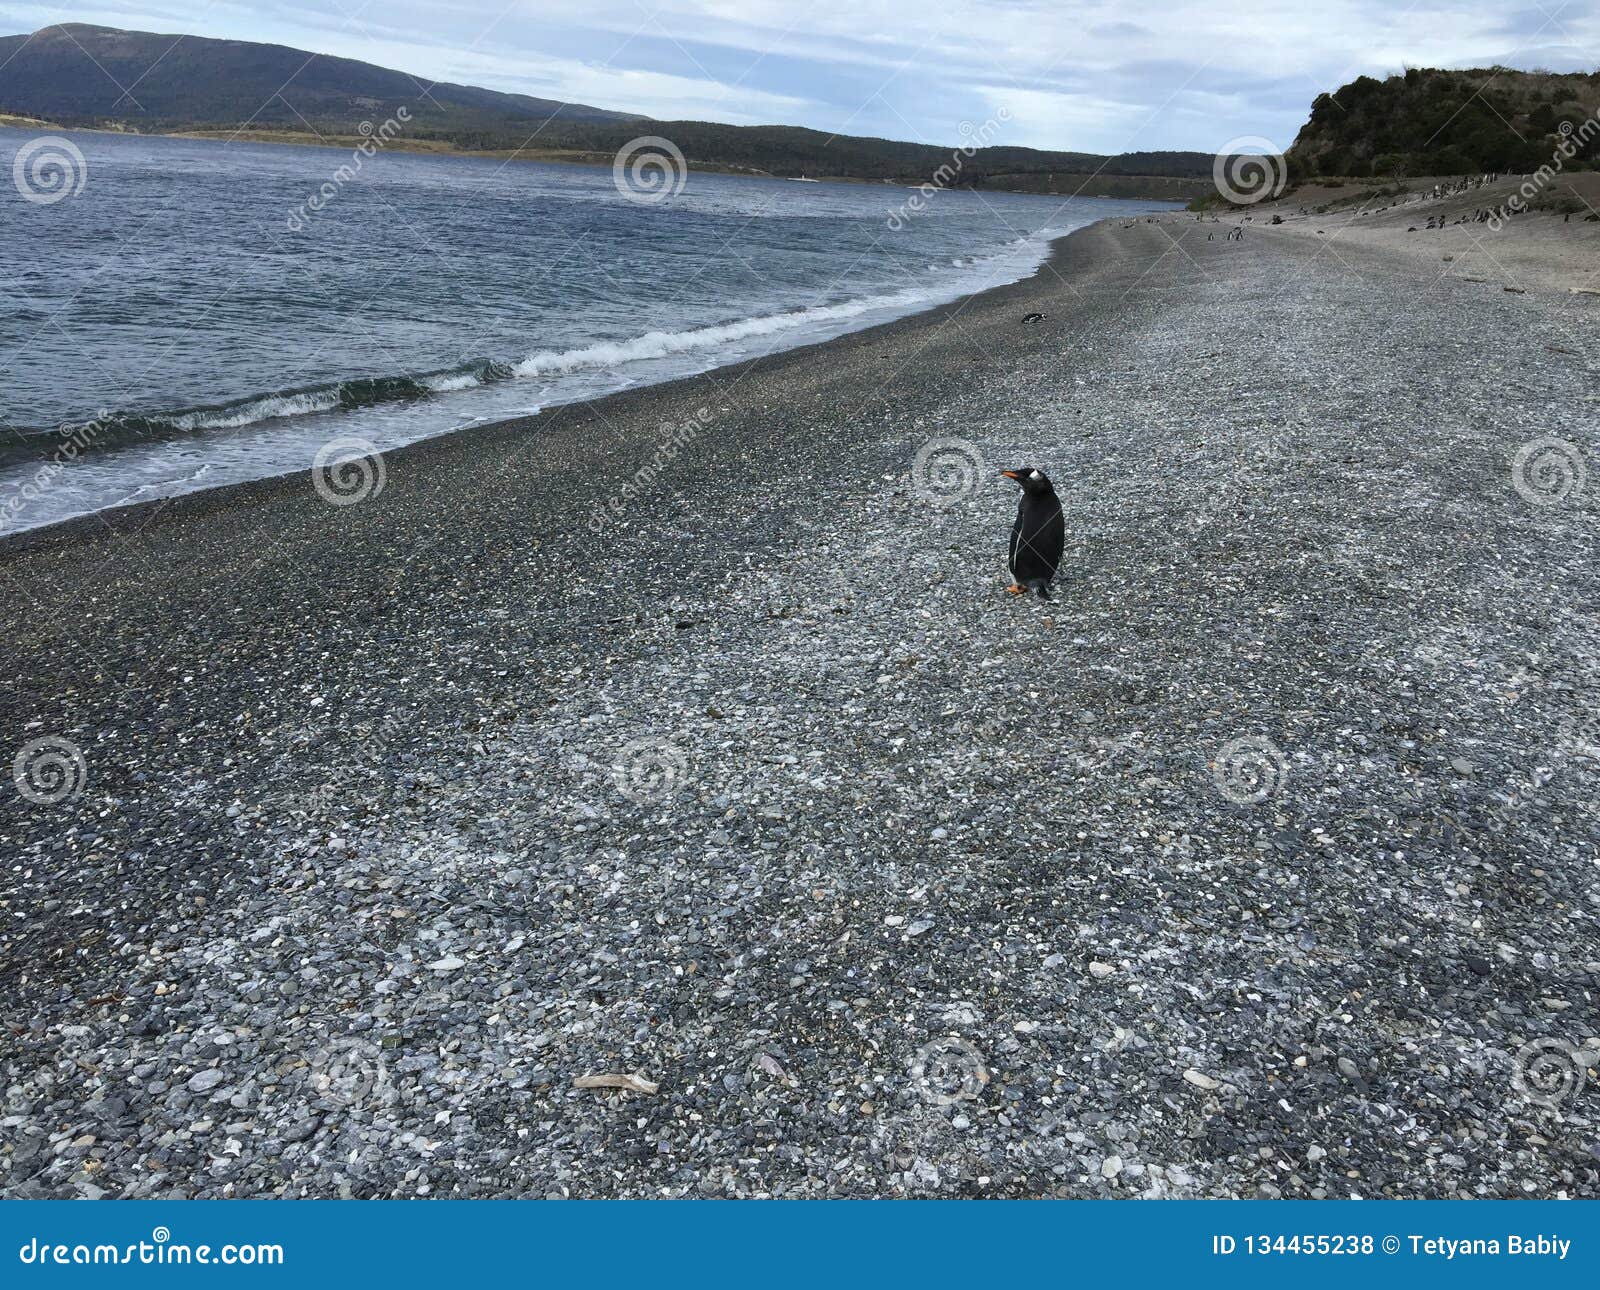 penguin on martillo island - the guard.